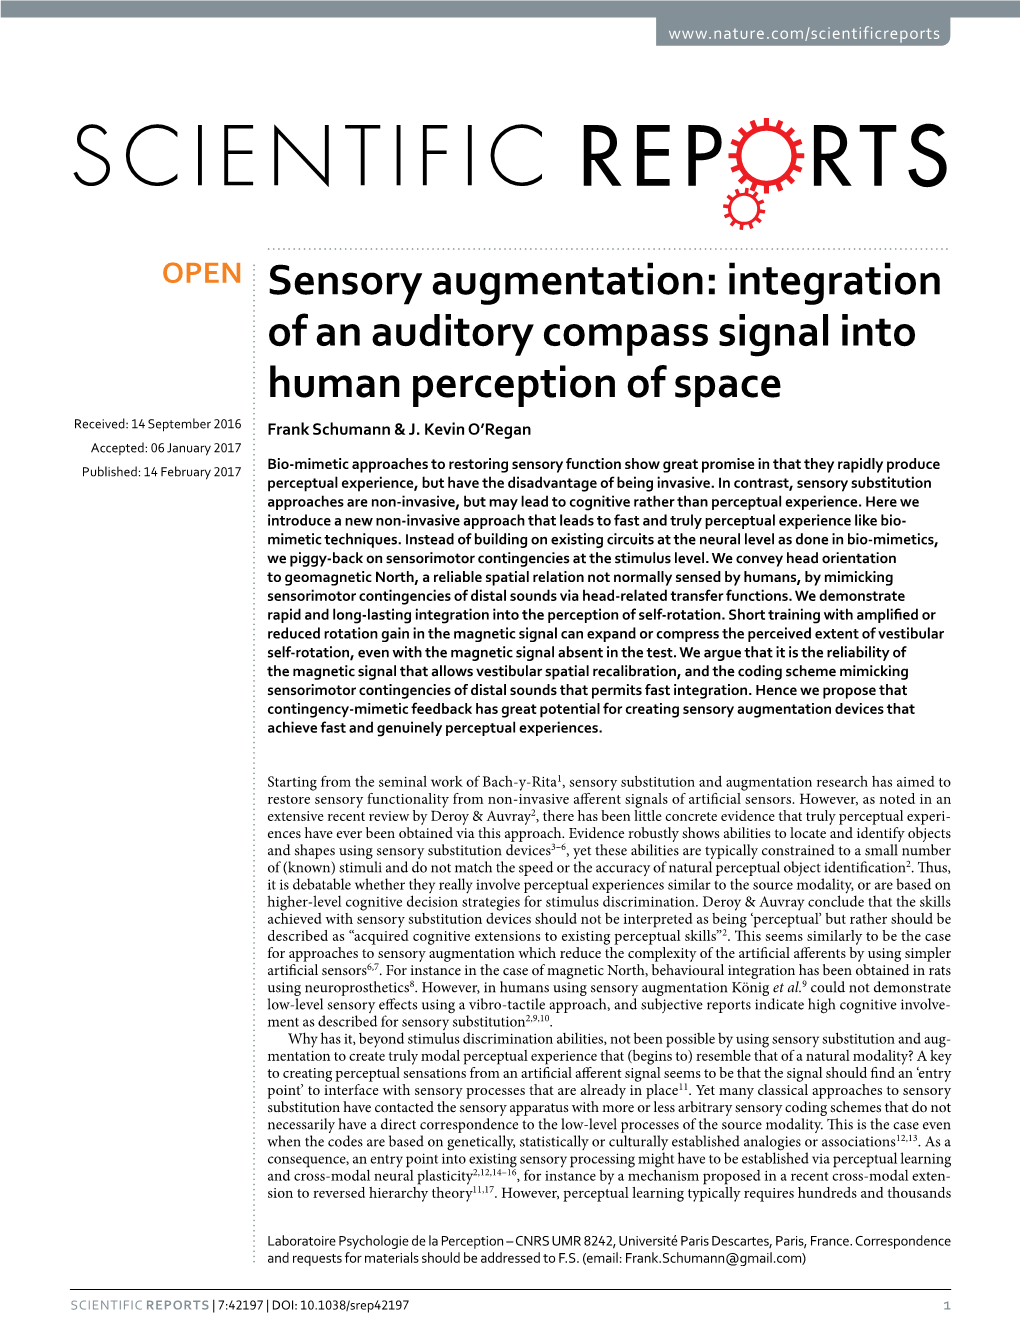 Sensory Augmentation: Integration of an Auditory Compass Signal Into Human Perception of Space Received: 14 September 2016 Frank Schumann & J